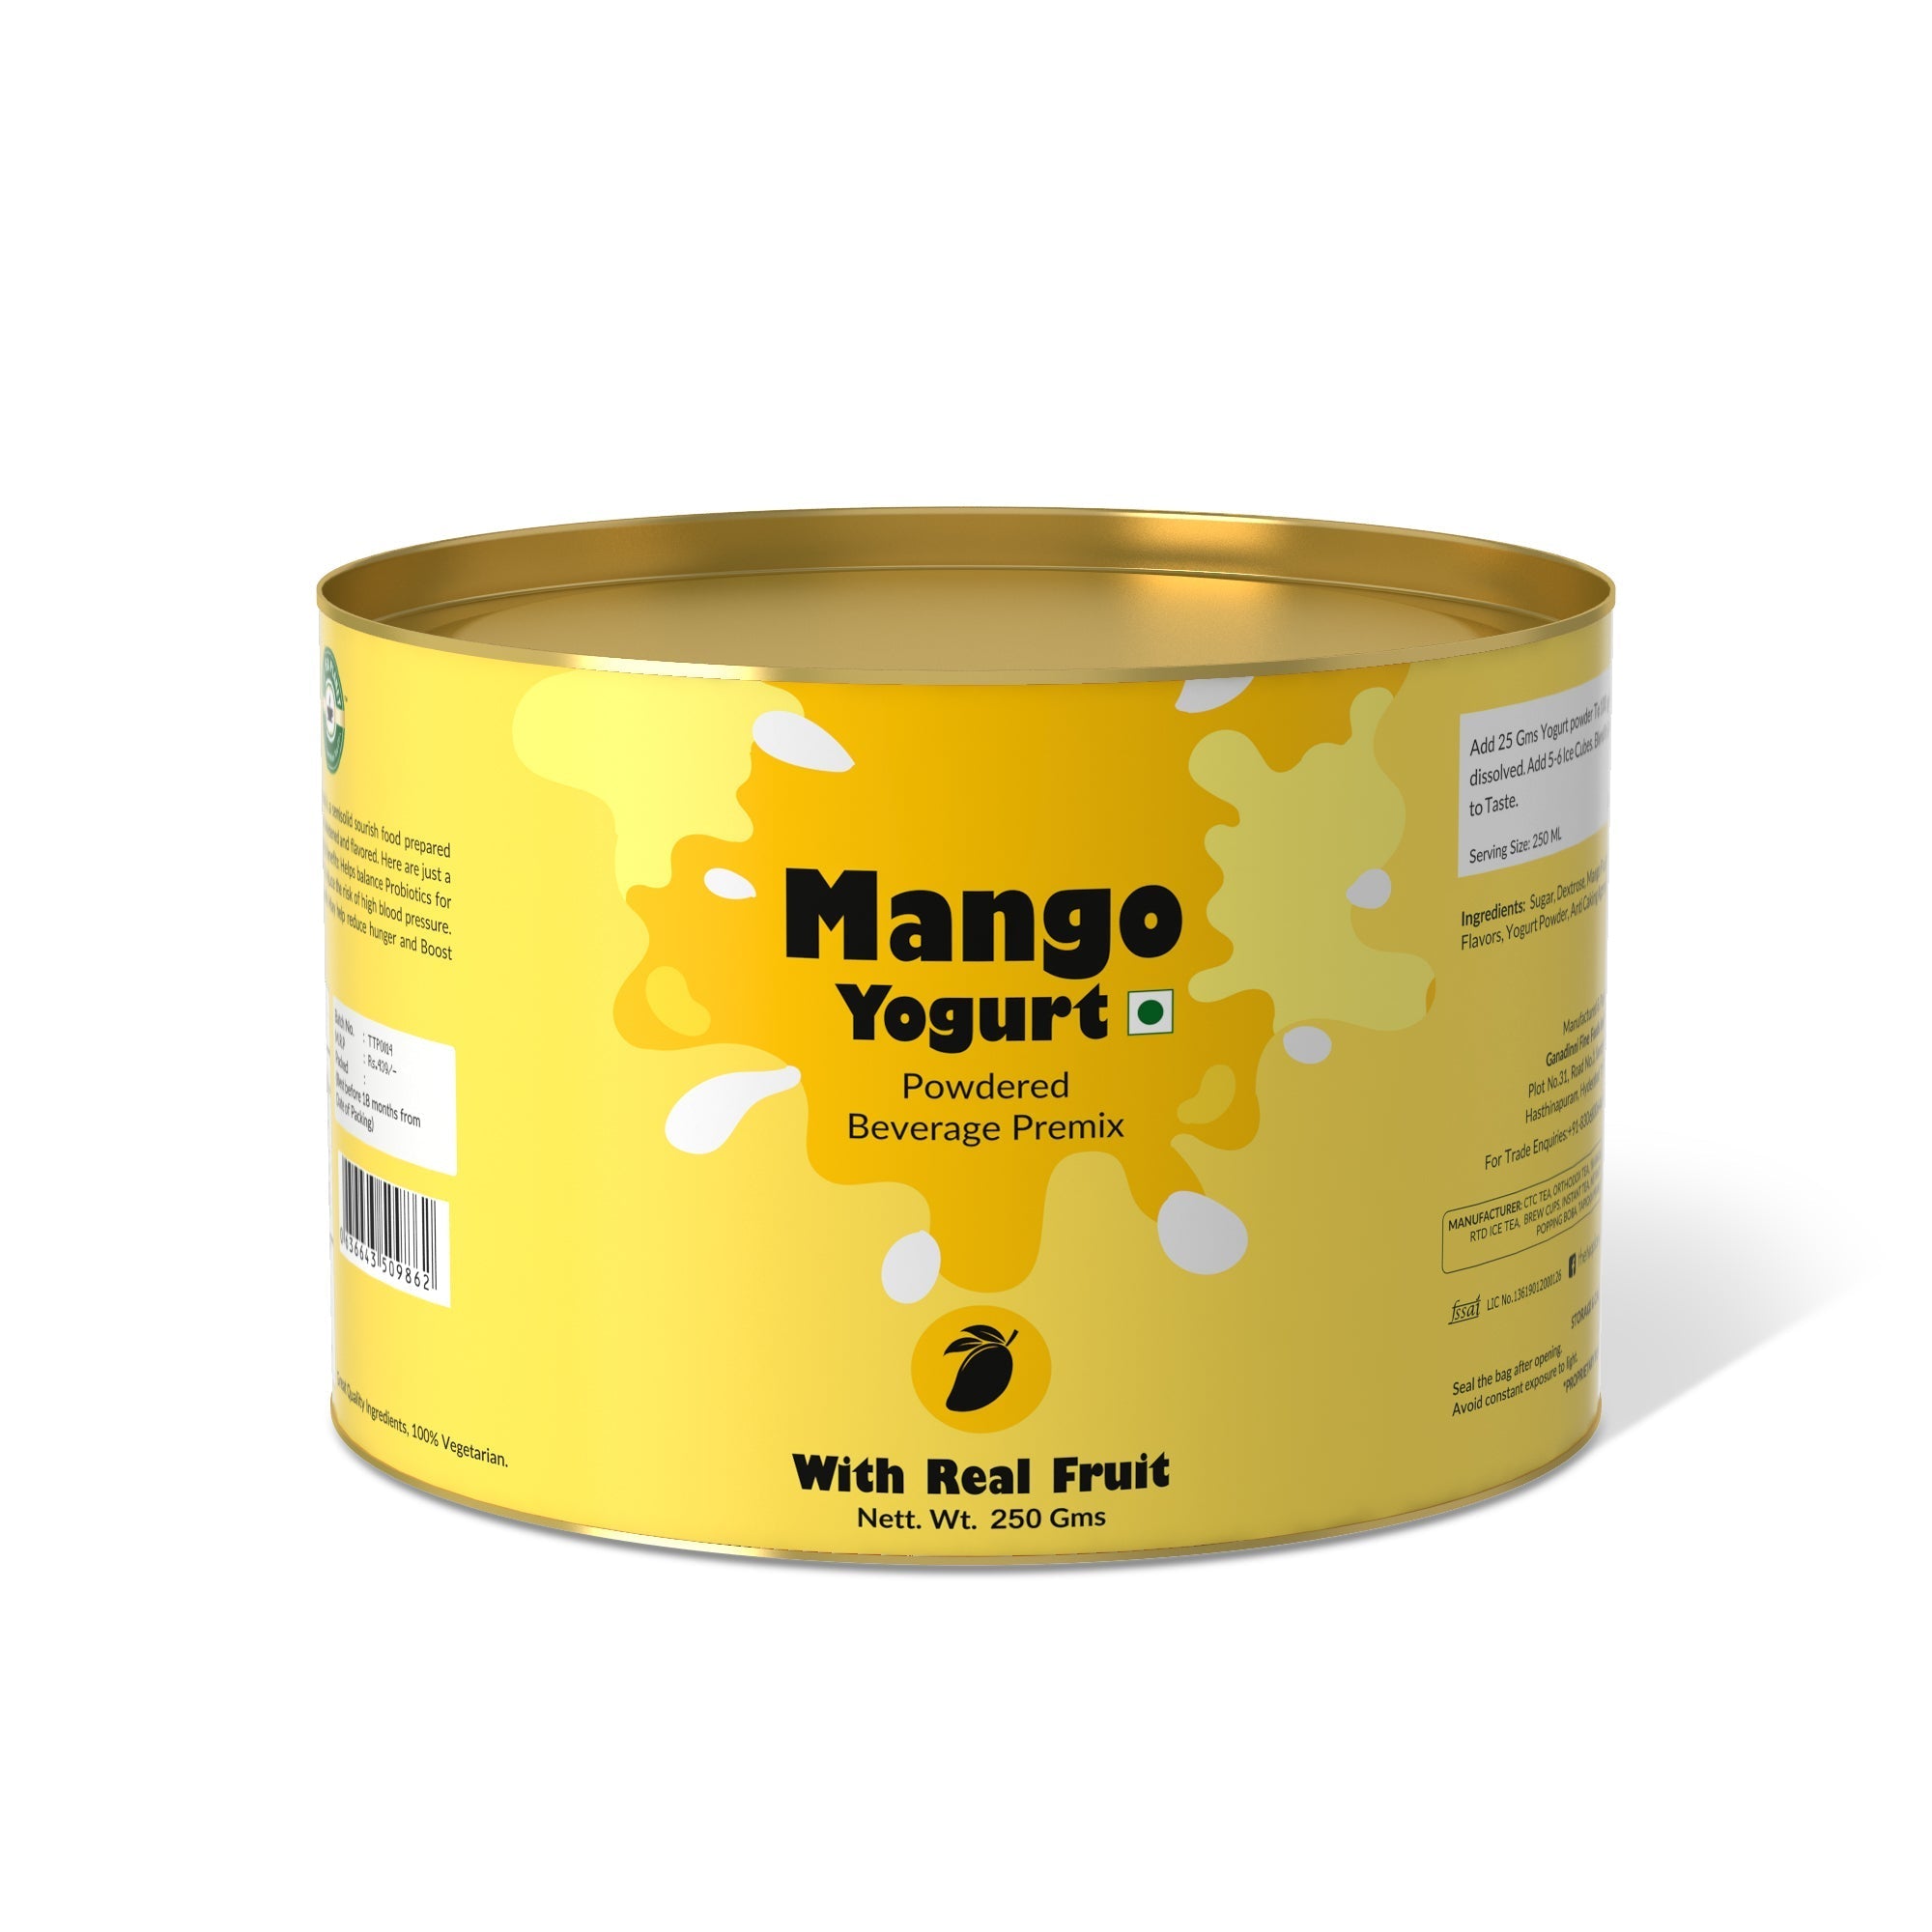 Mango Yogurt Mix - 800 gms